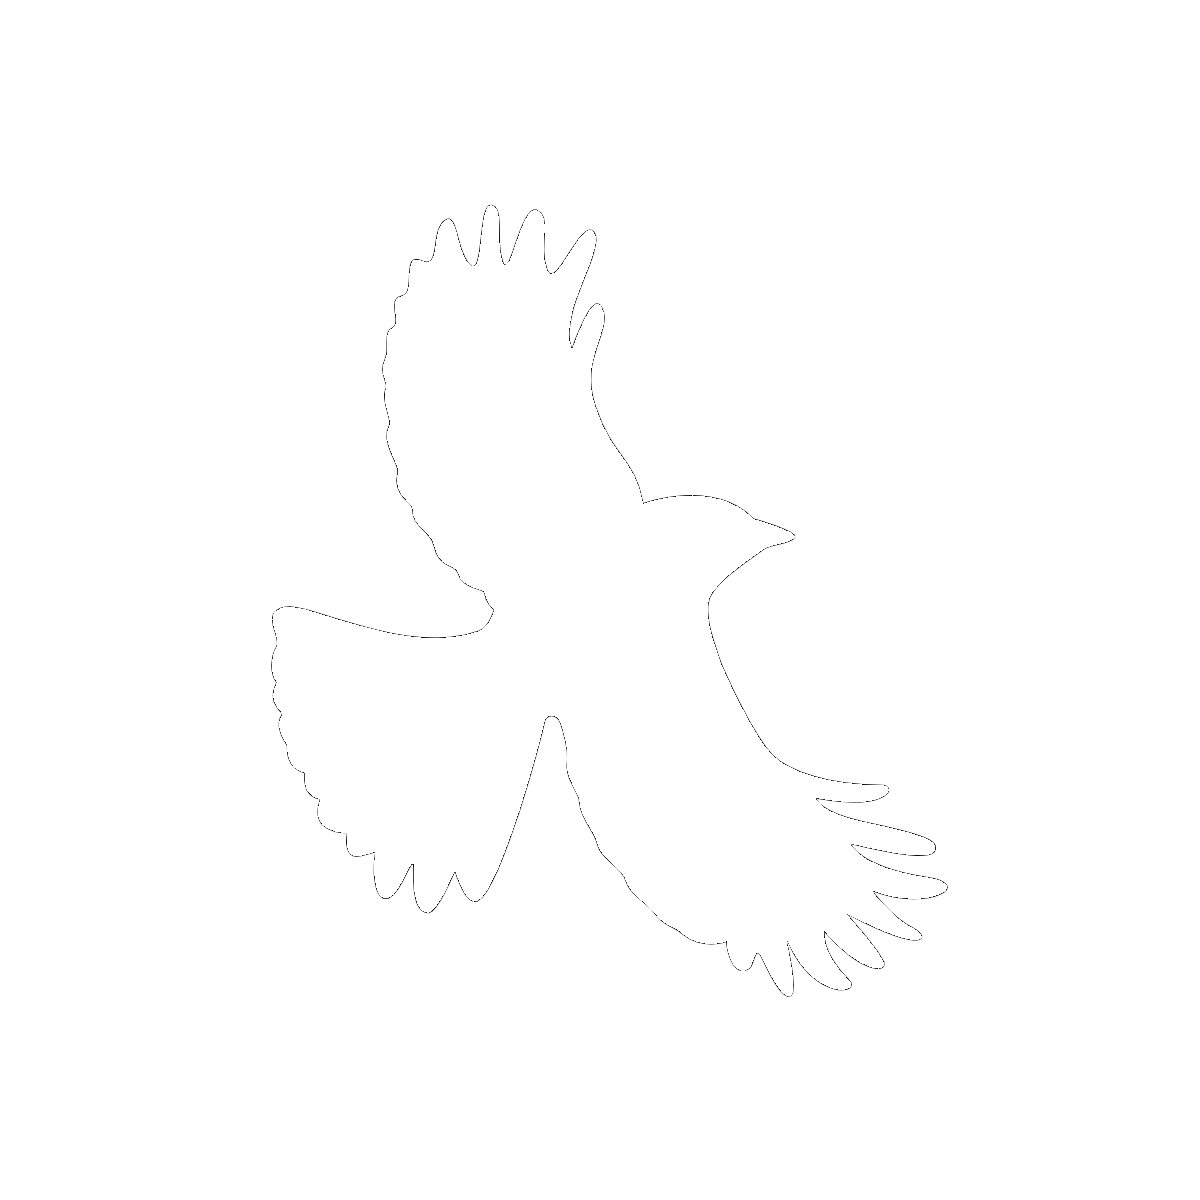 Symbol Birds, Flight, and the Sky